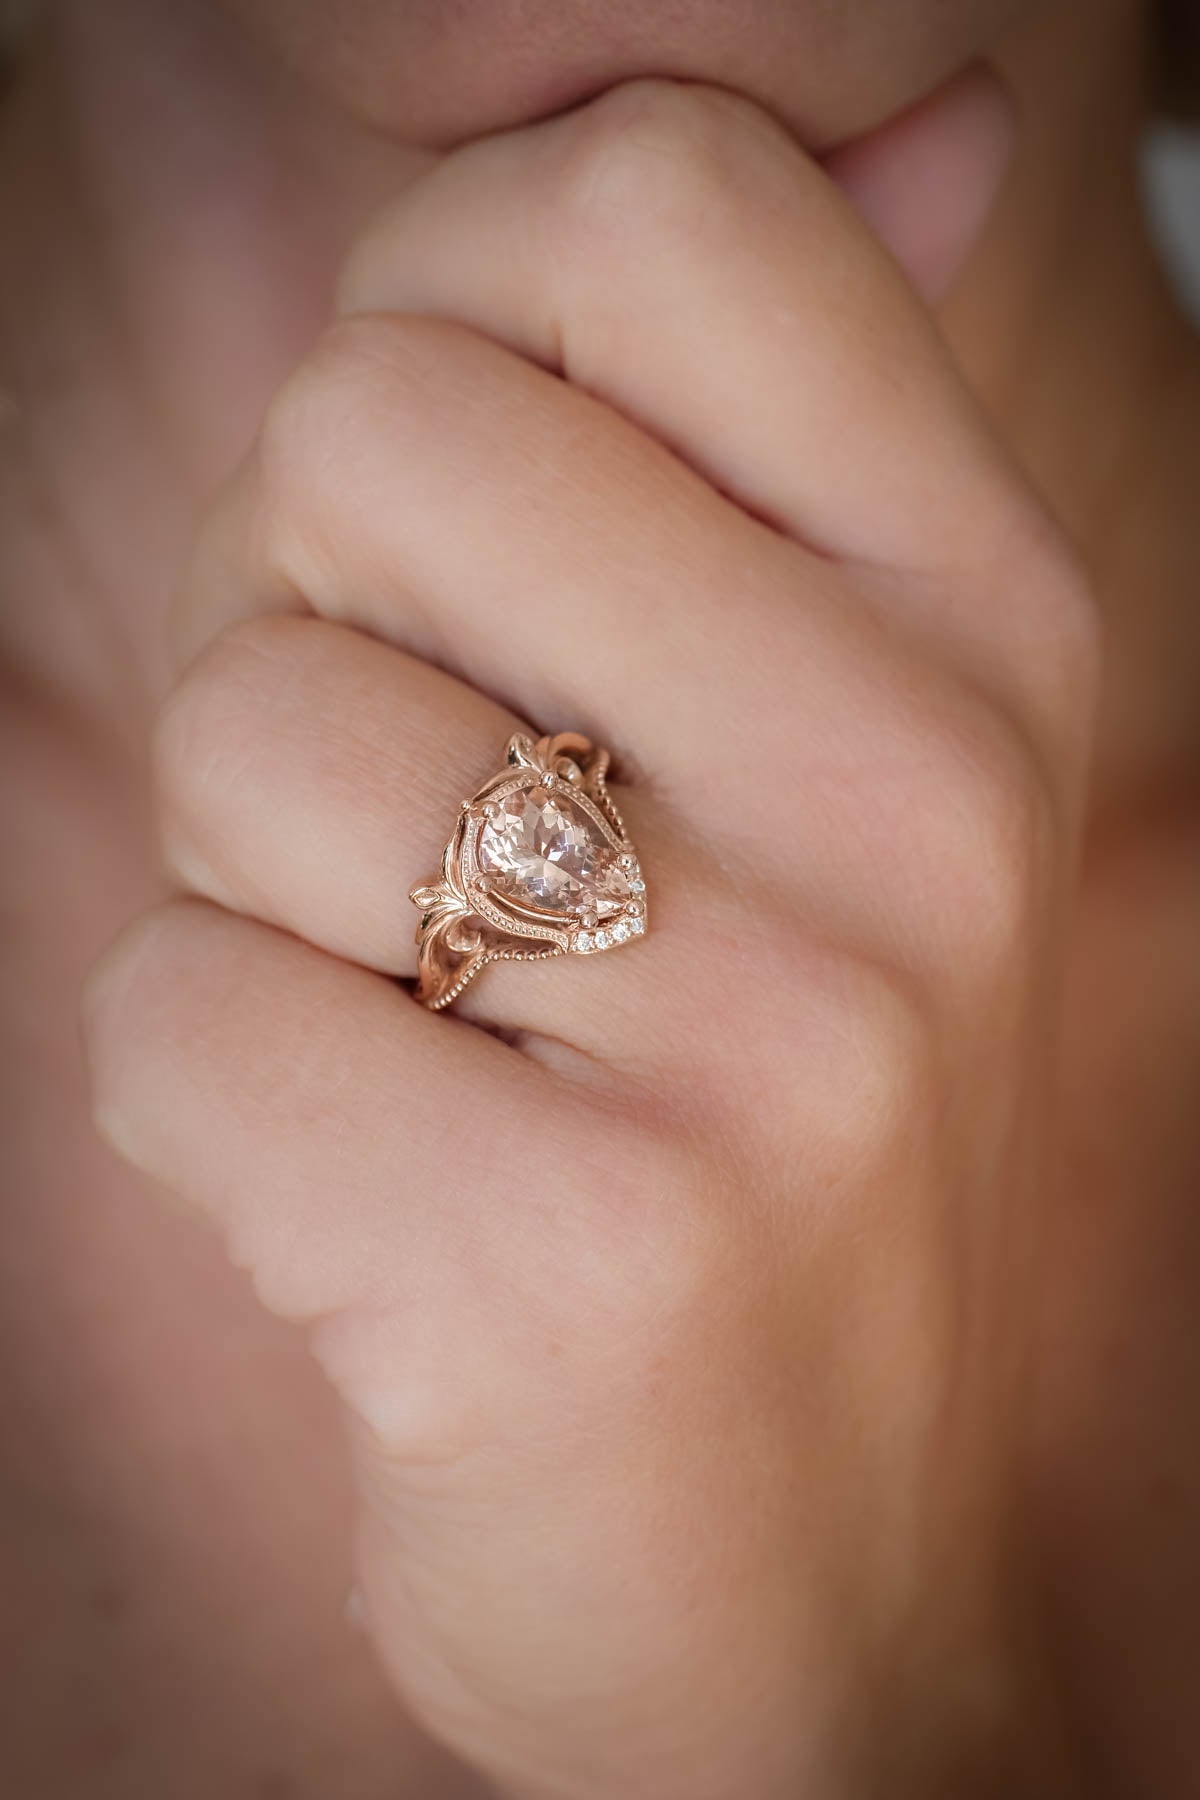 Peach morganite engagement ring, big gemstone ring / Lida - Eden Garden Jewelry™